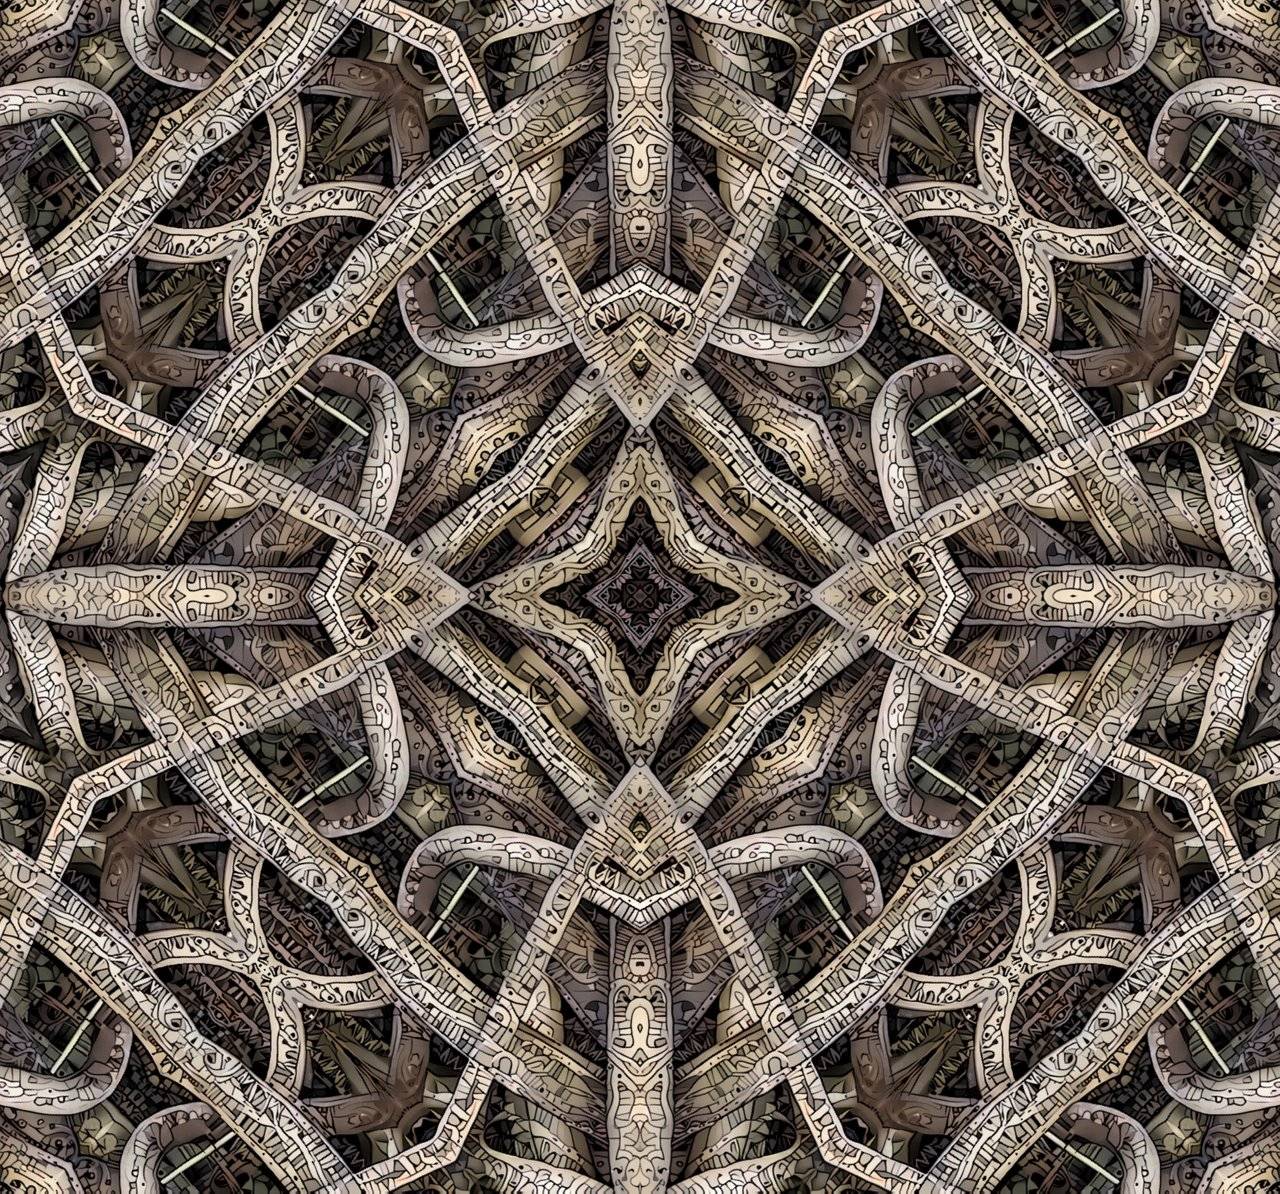 kelp3 abstractlines x2 OG cropmirror 45rotcrop mirror crop.jpg